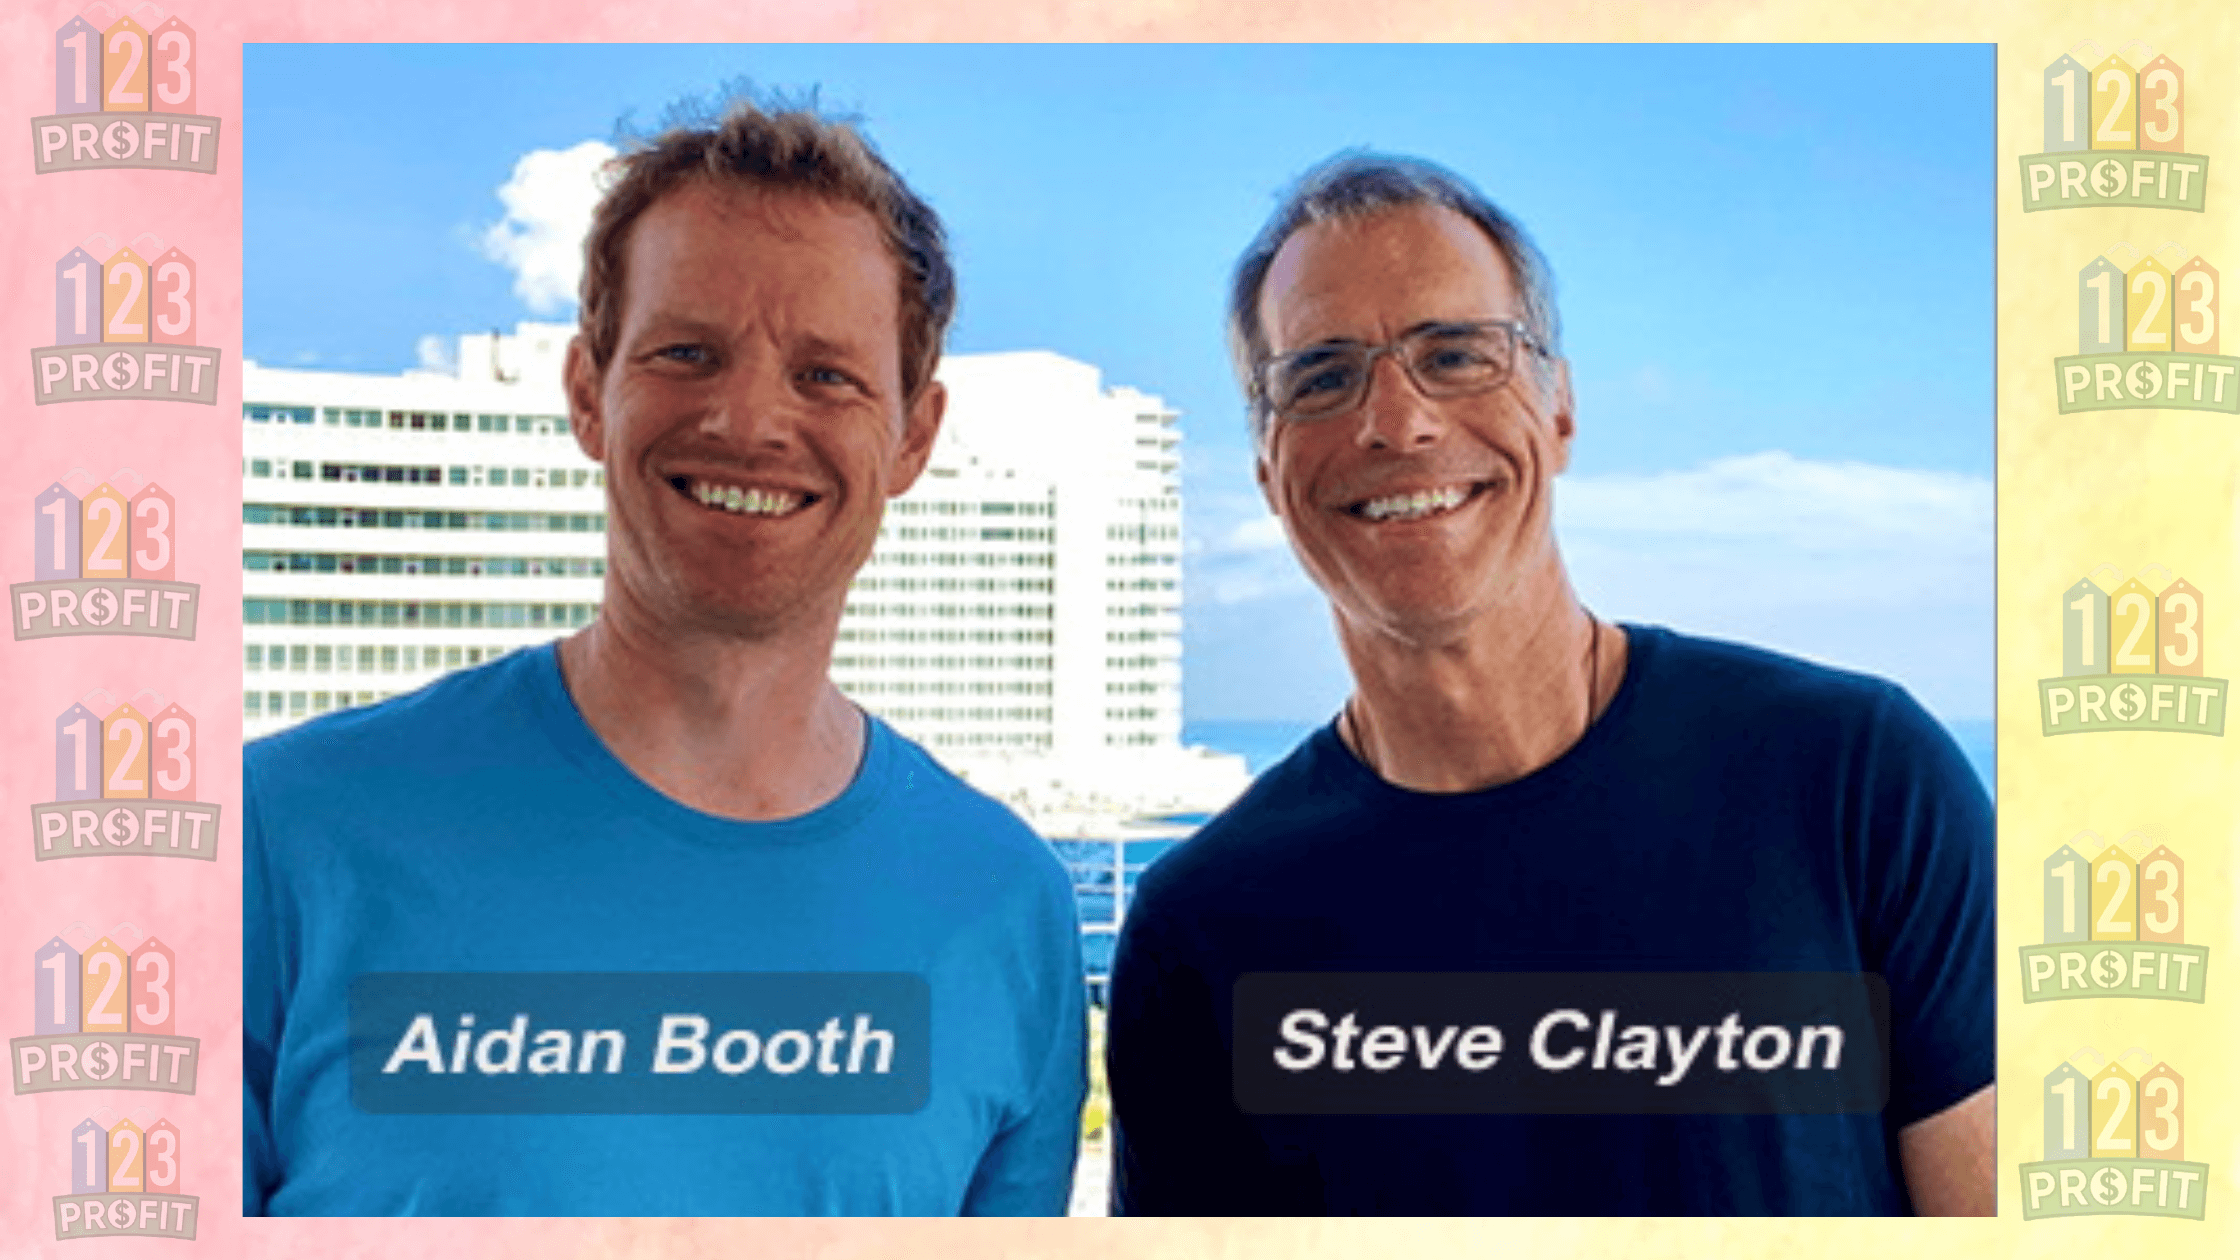 Aidan Booth and Steve Clayton's 123 Profit Program